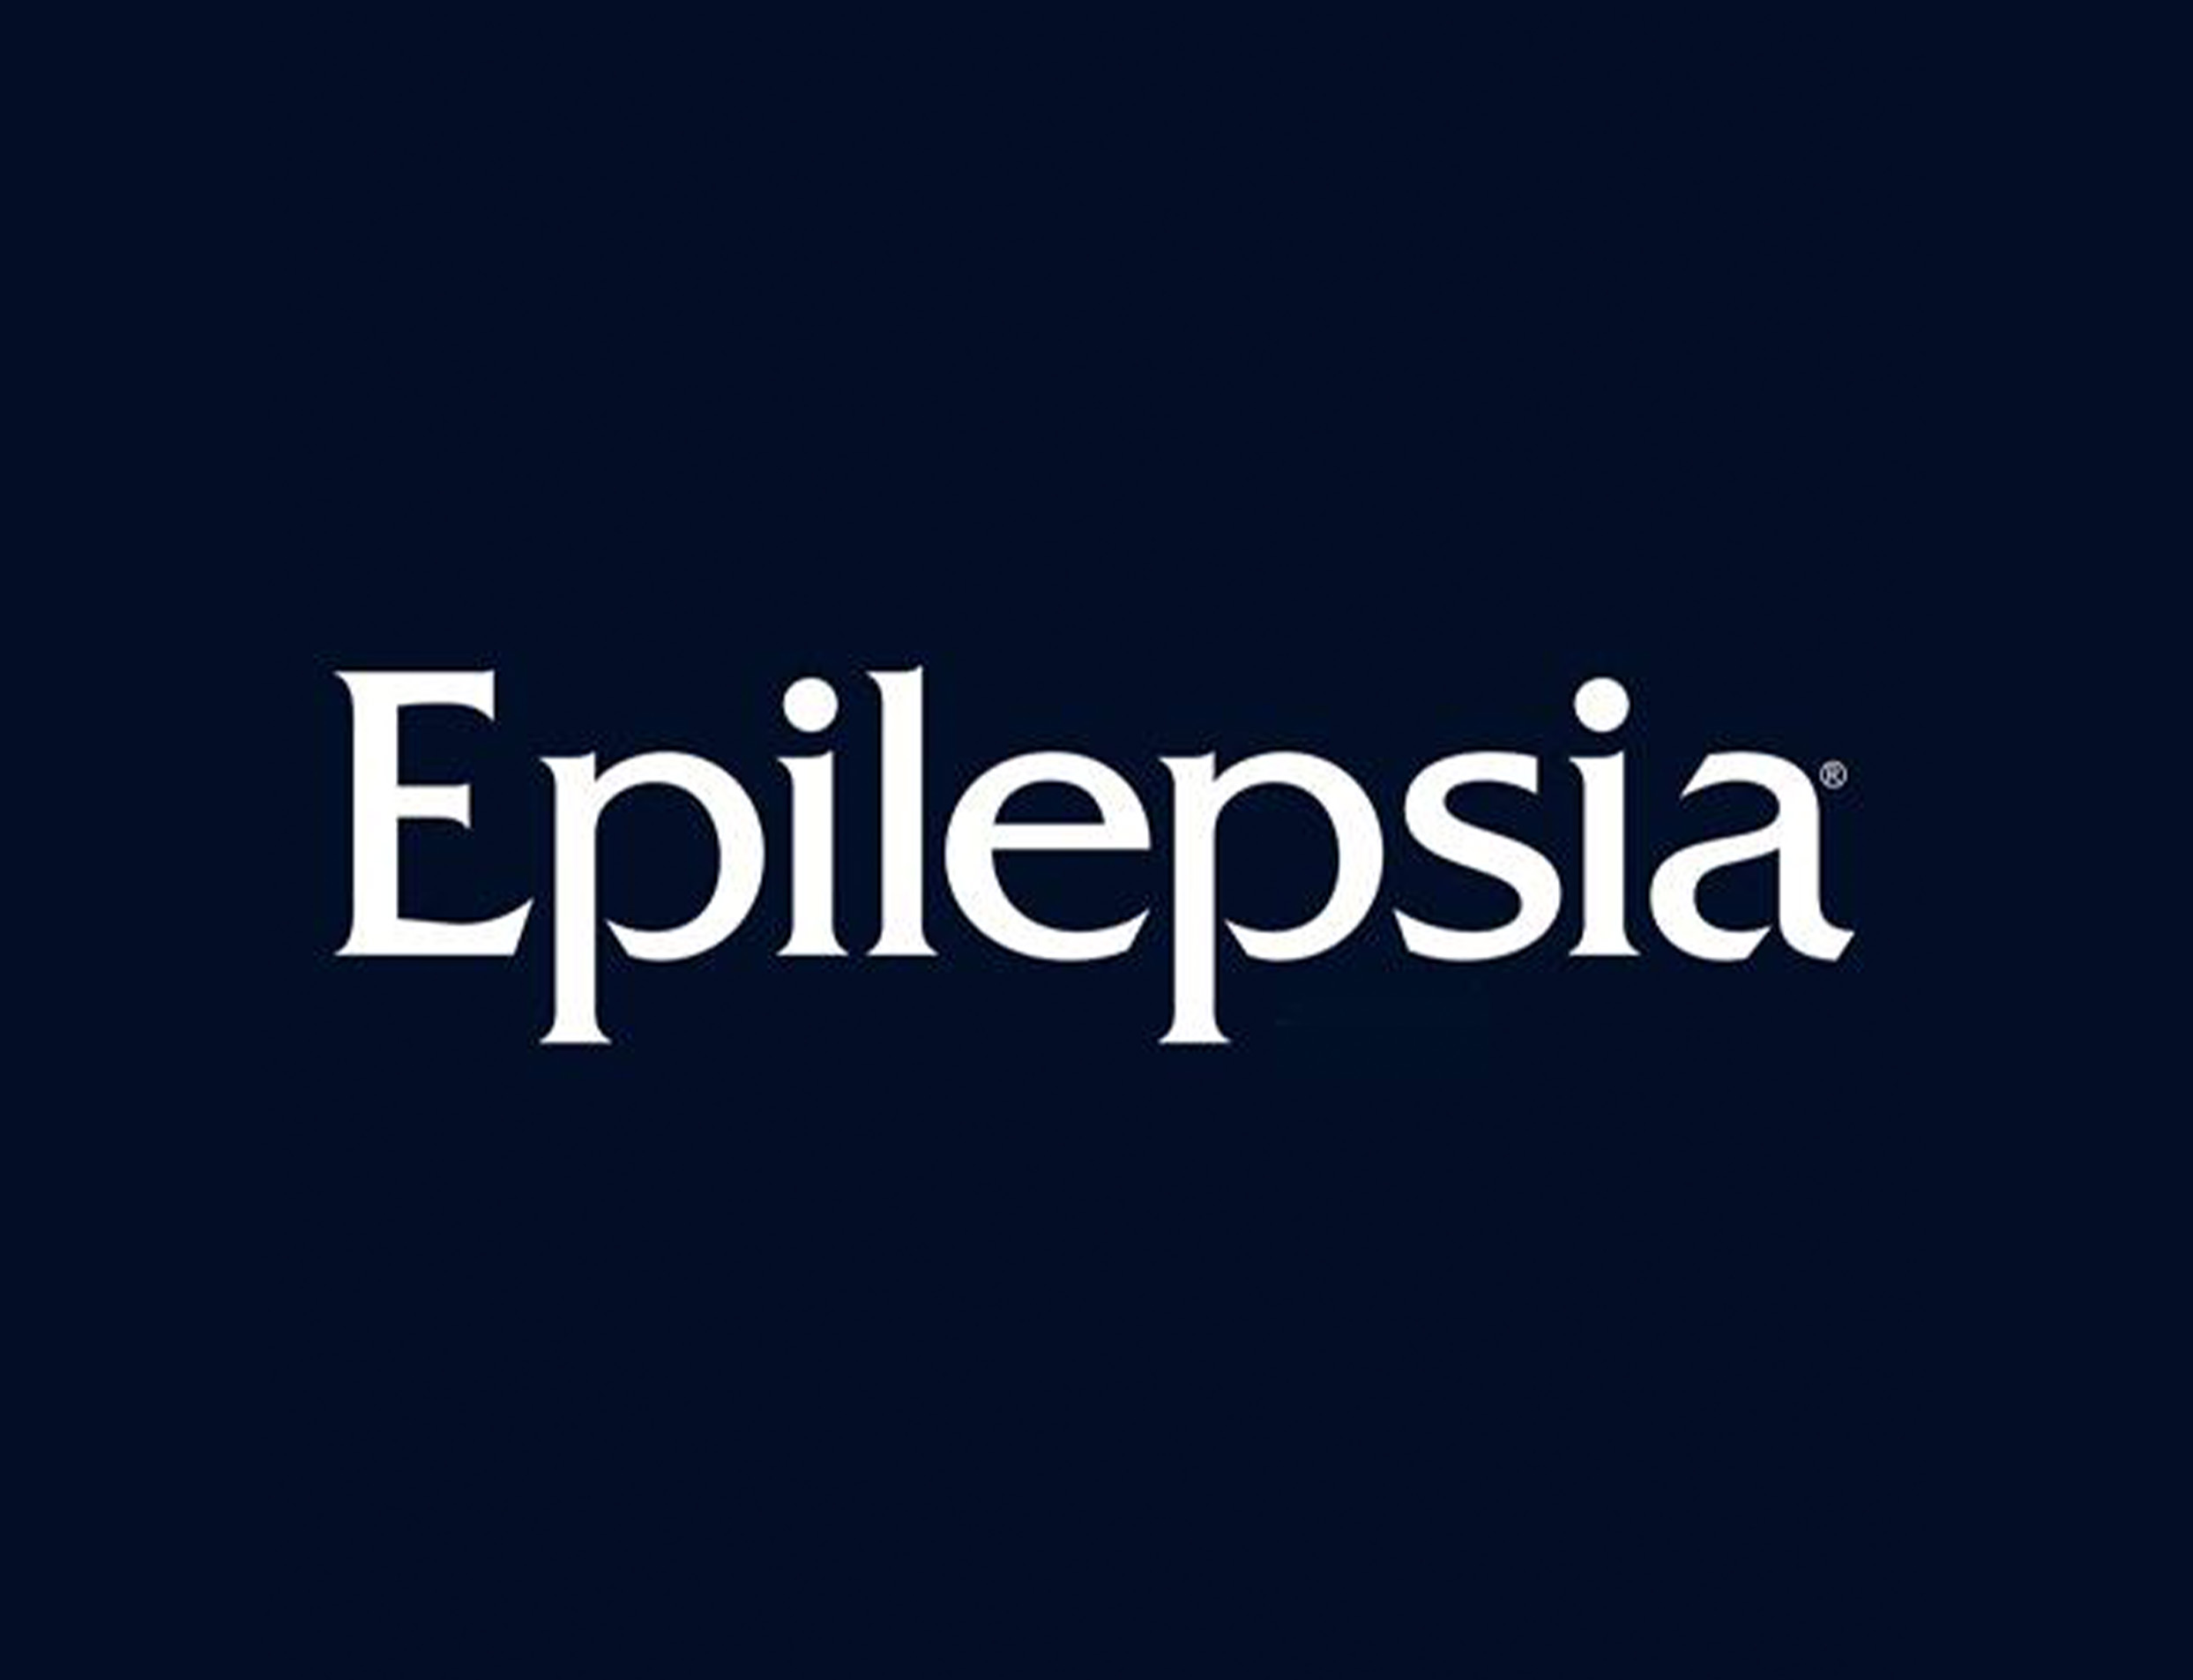 Epilepsia publication logo